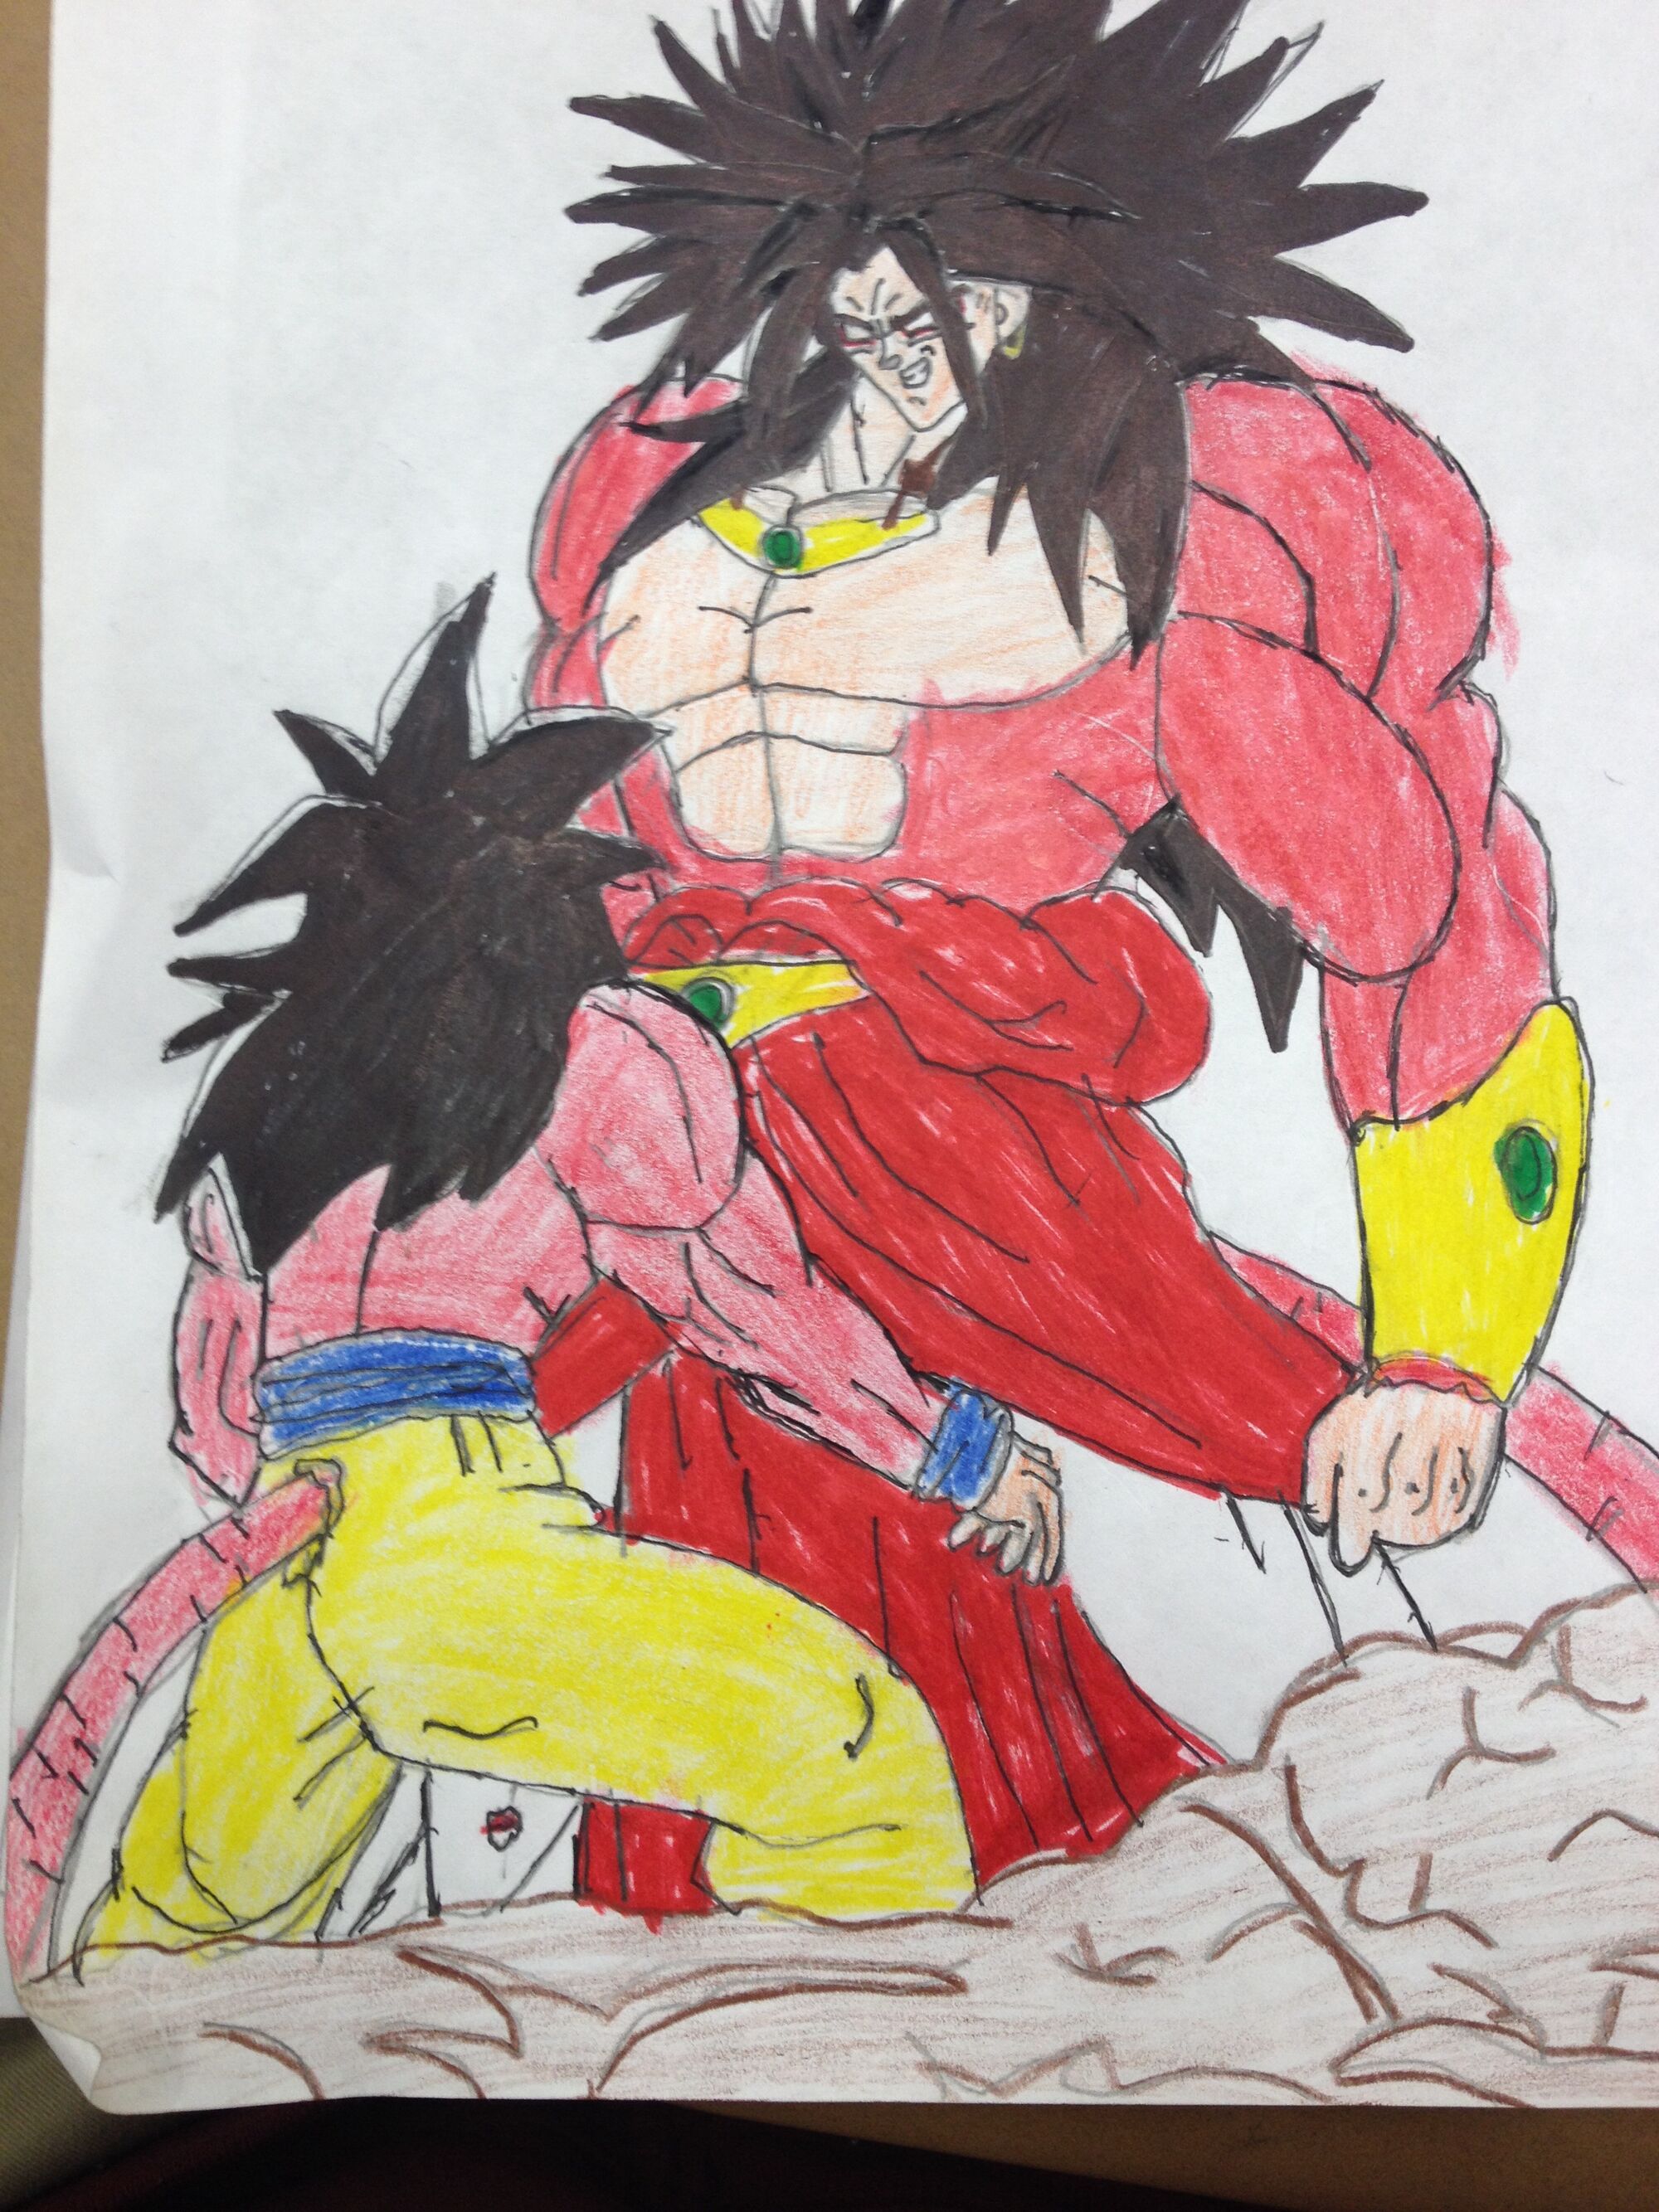 Image - Broly Legendary Super Saiyan 4 vs Goku Super ...